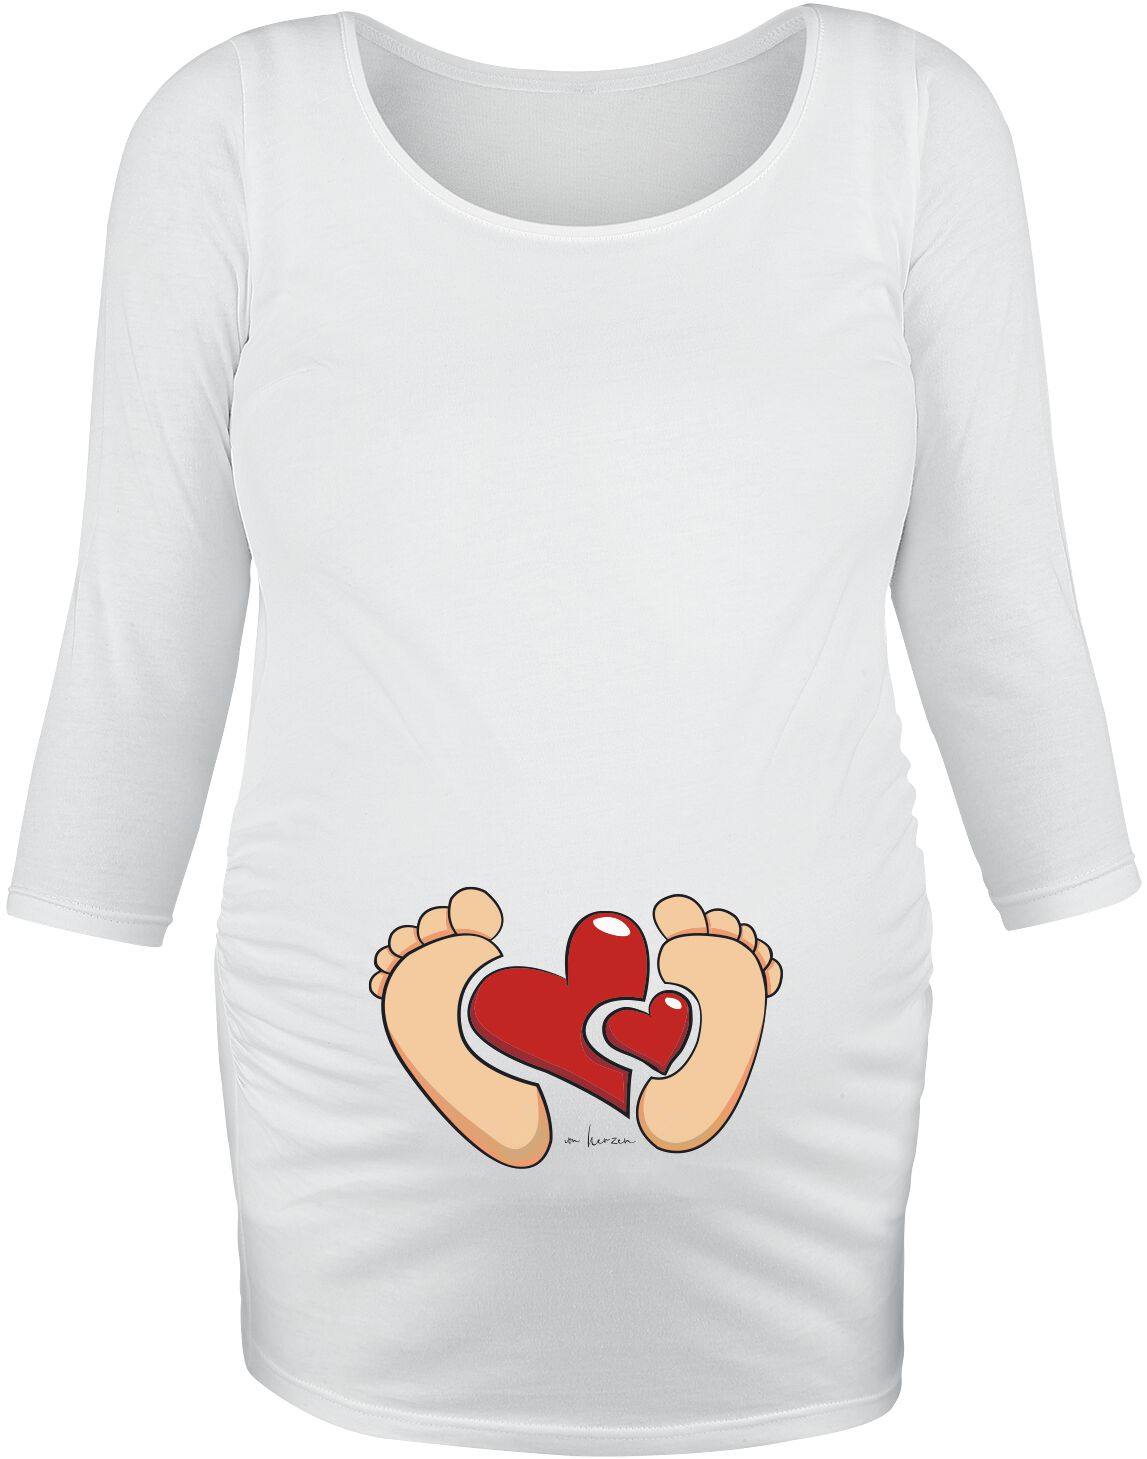 Maternity fashion Heart and Feet Long Sleeve Top Long-sleeve Shirt white